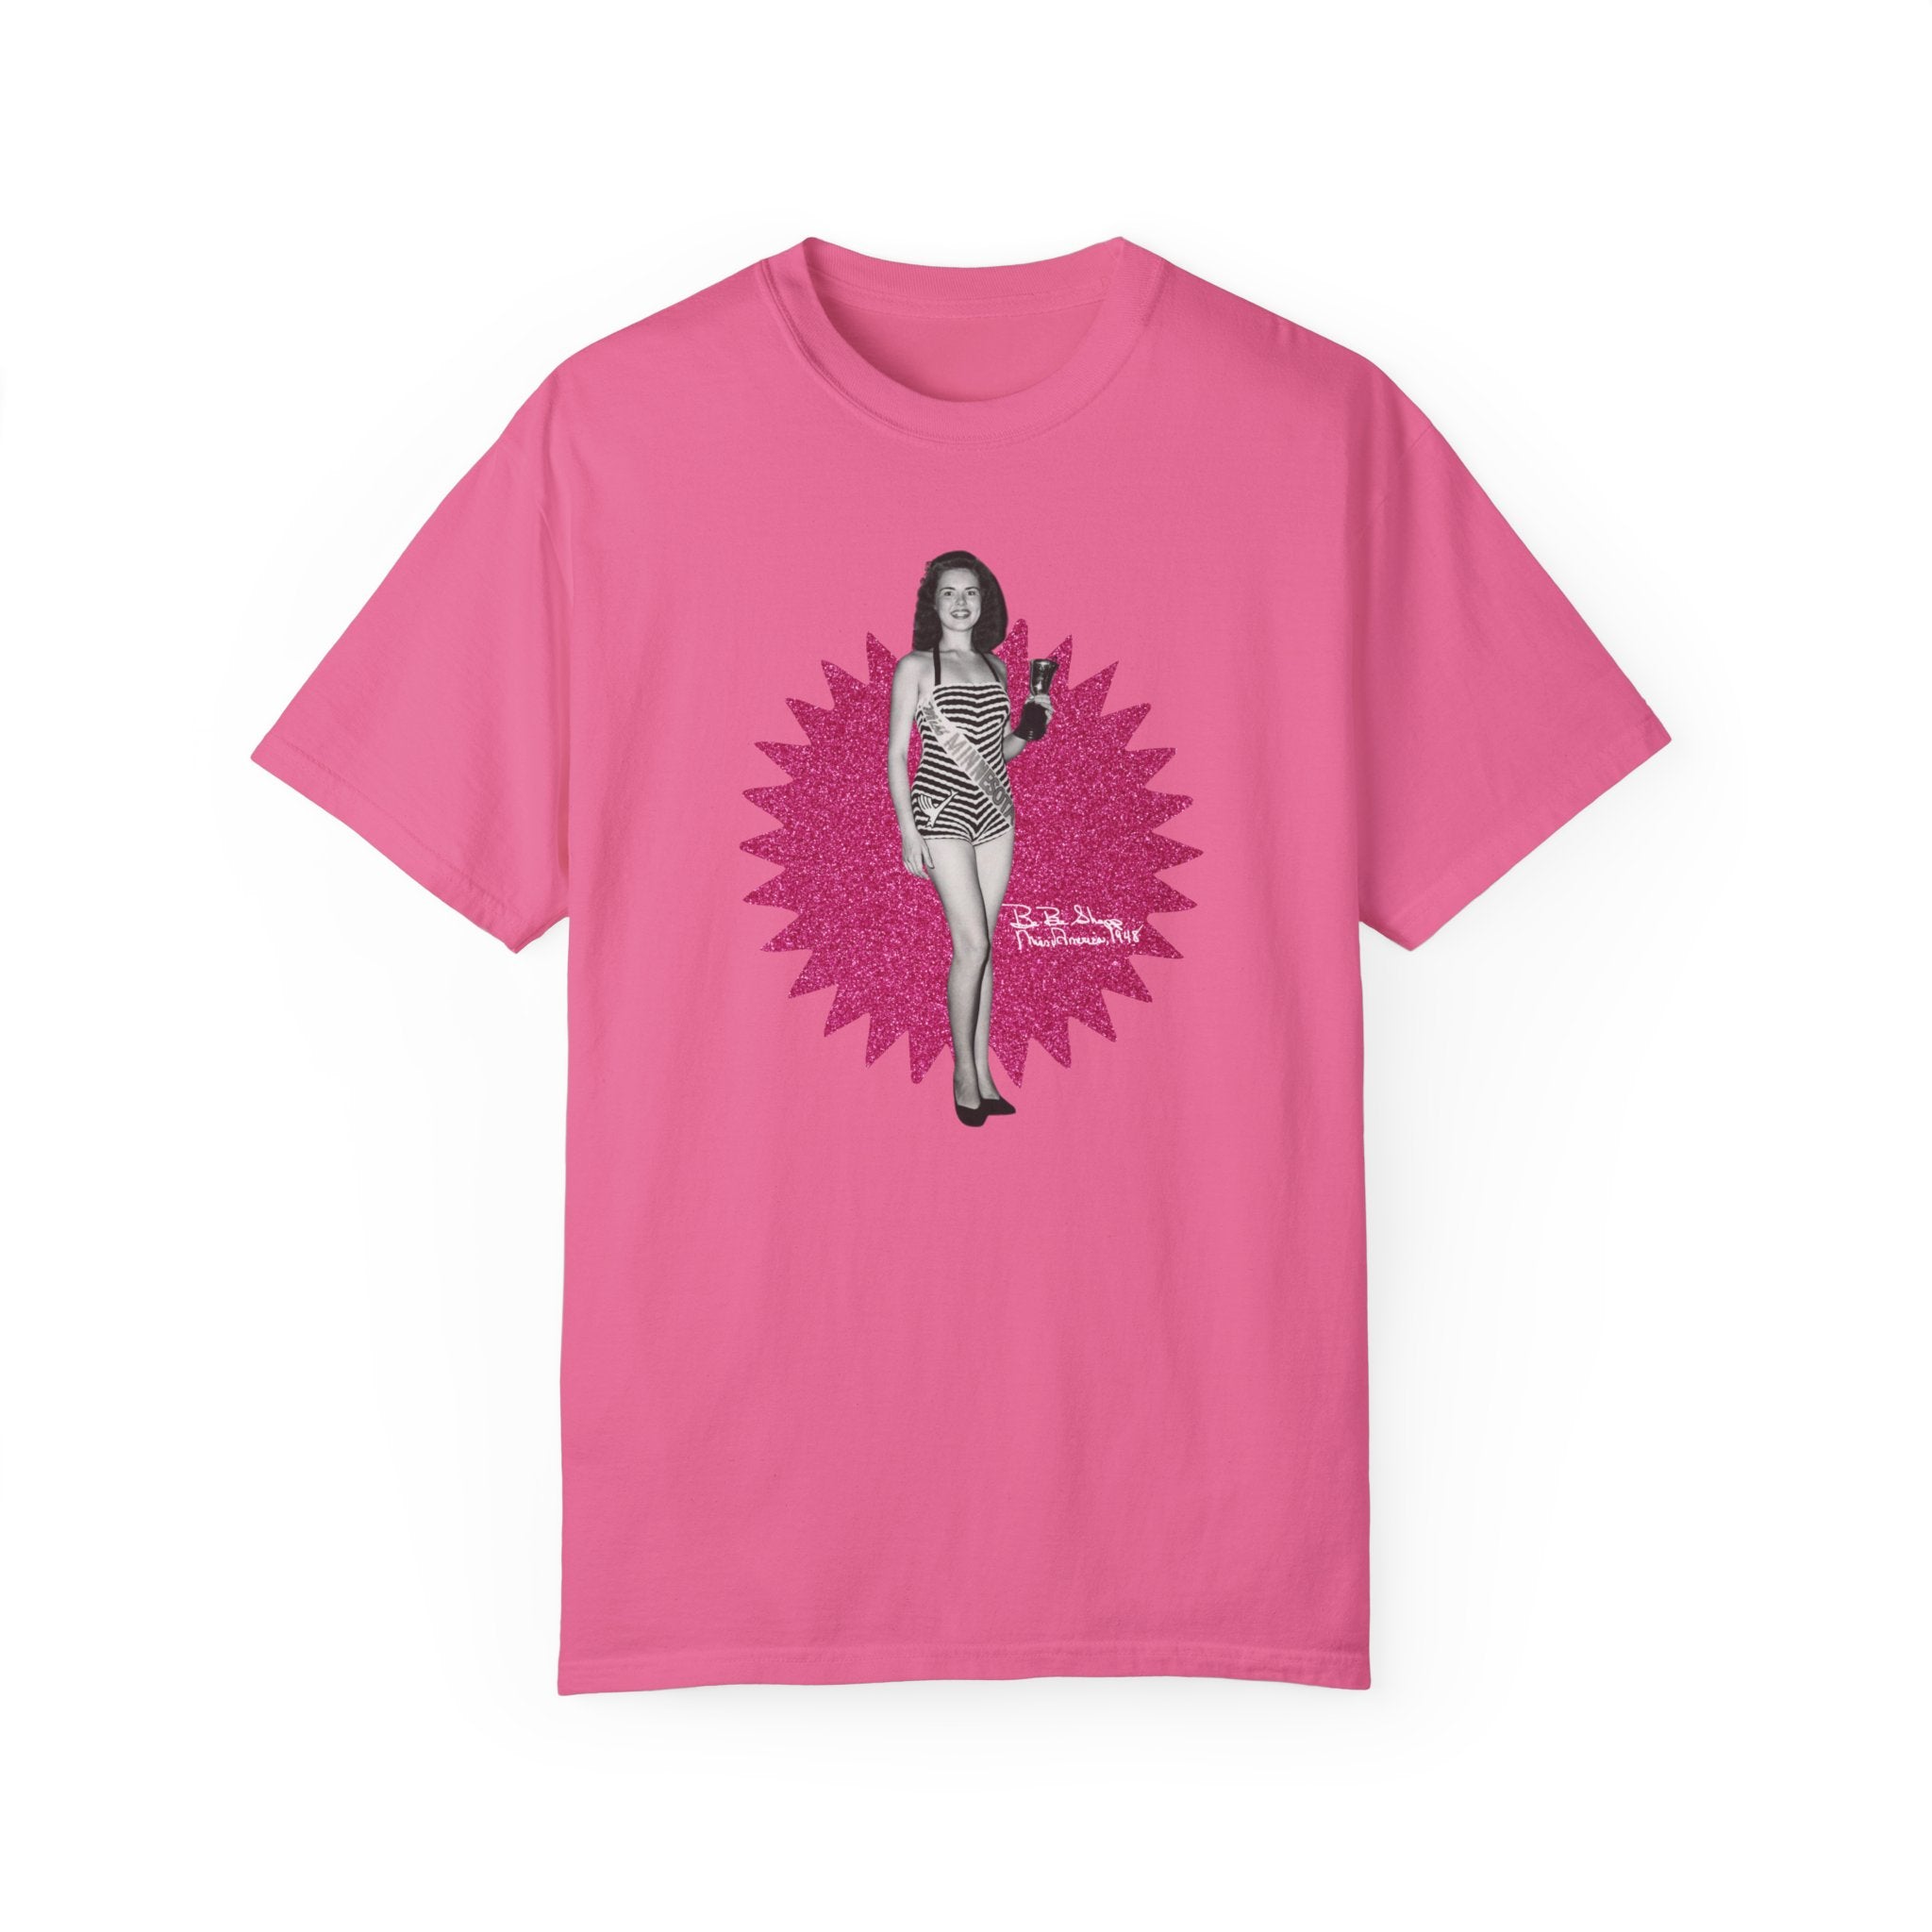 Bebe Shop x Barbie Inspired T-shirt